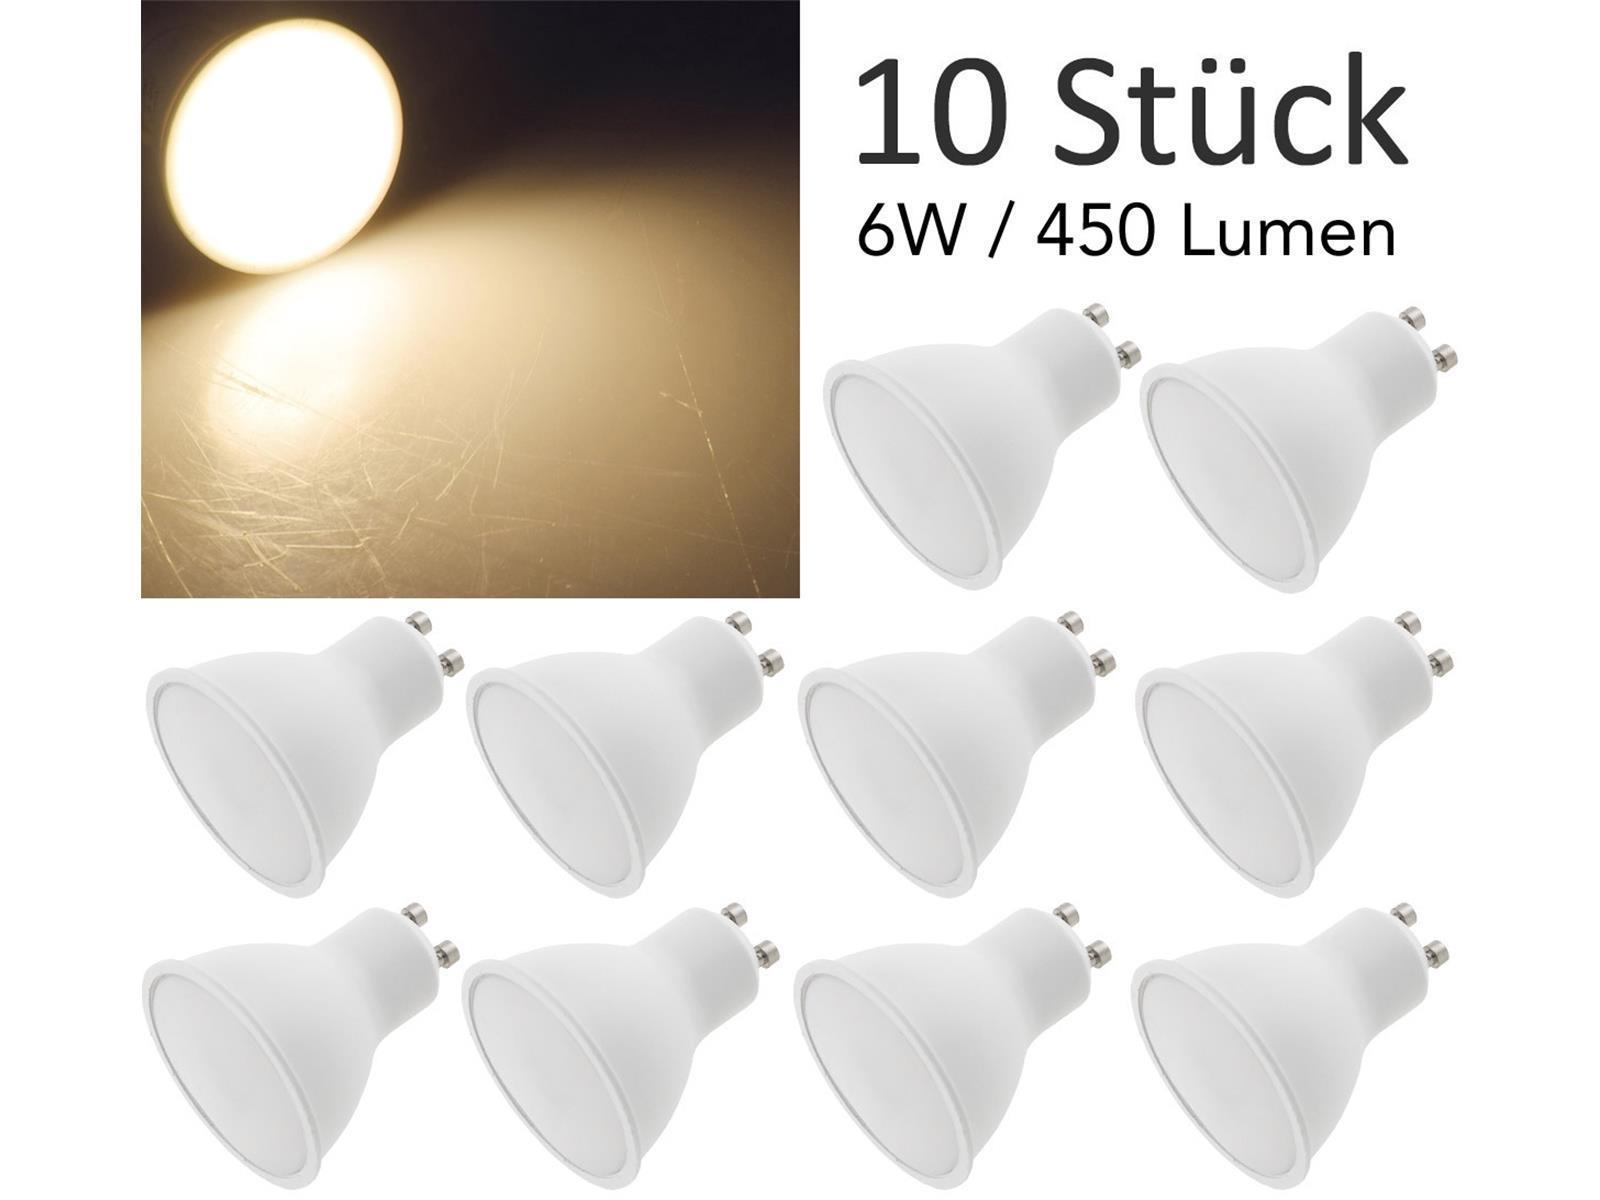 LED Strahler GU10 "H50 Promo1" 10er-Pack3000k, 450lm, 230V/6W, 120°, warmweiß